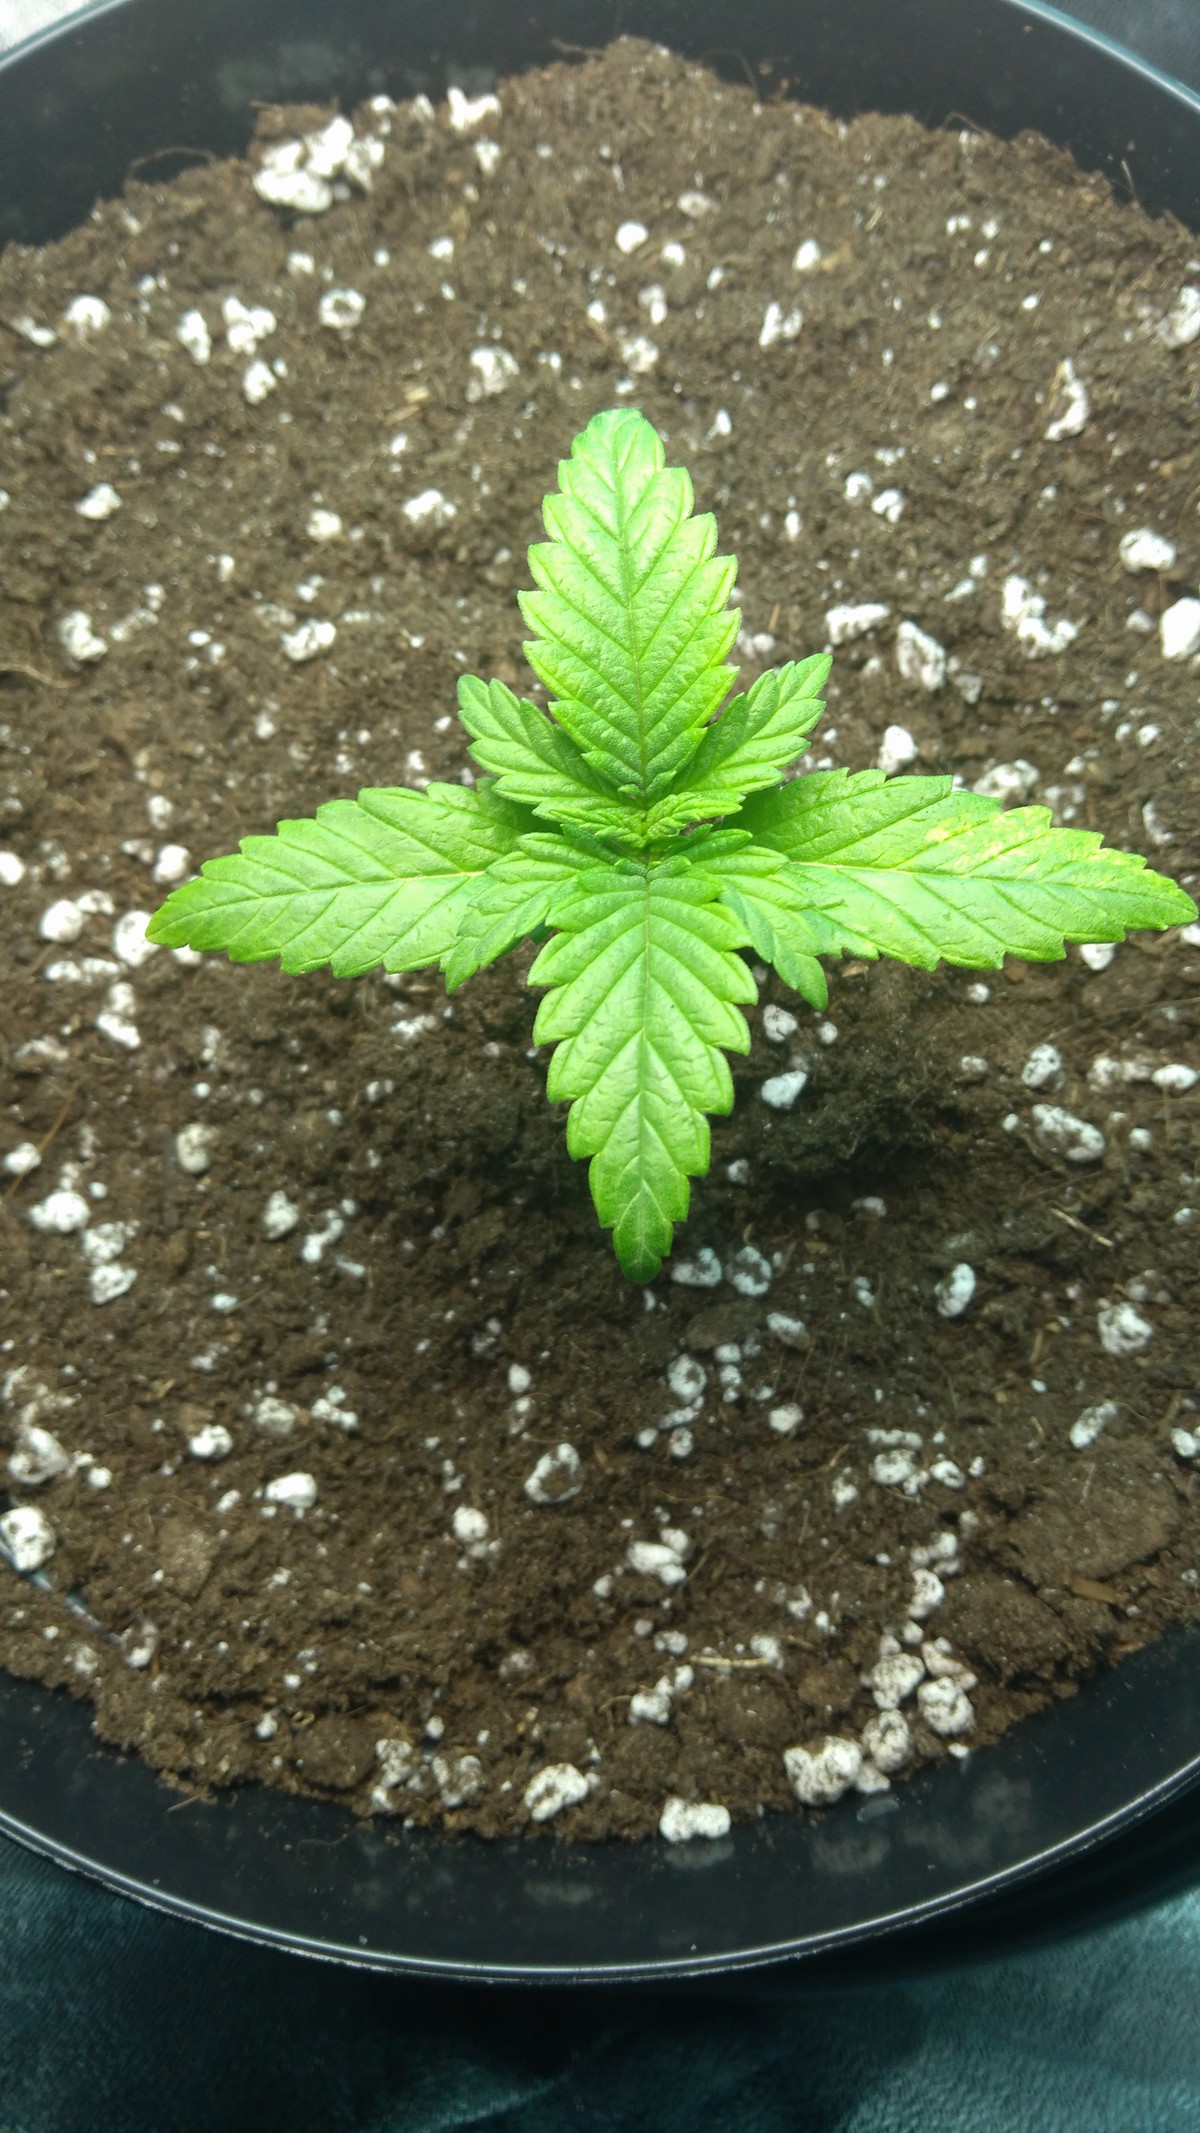 grow-lisc-marihuany-2.jpg